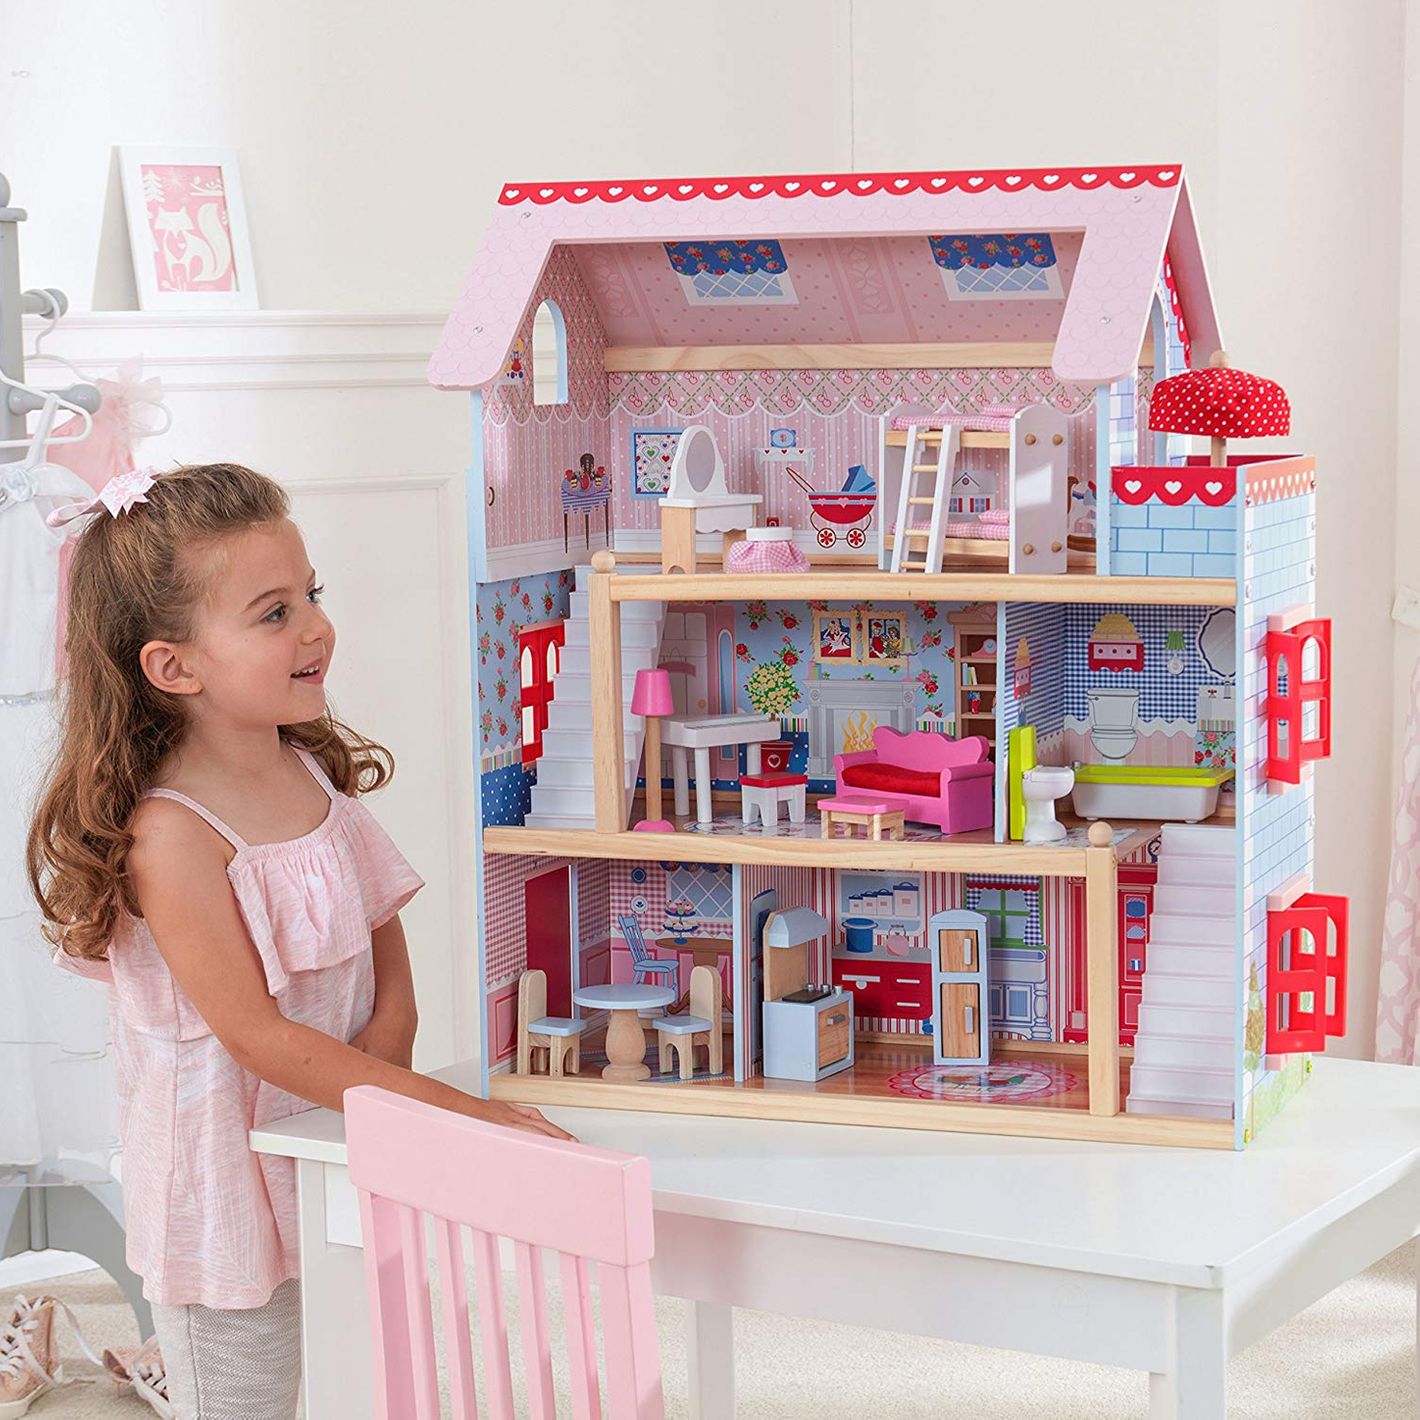 Miniature Barbie Room Bathroom Toy Dollhouse Furniture Accessories Kids Gift 